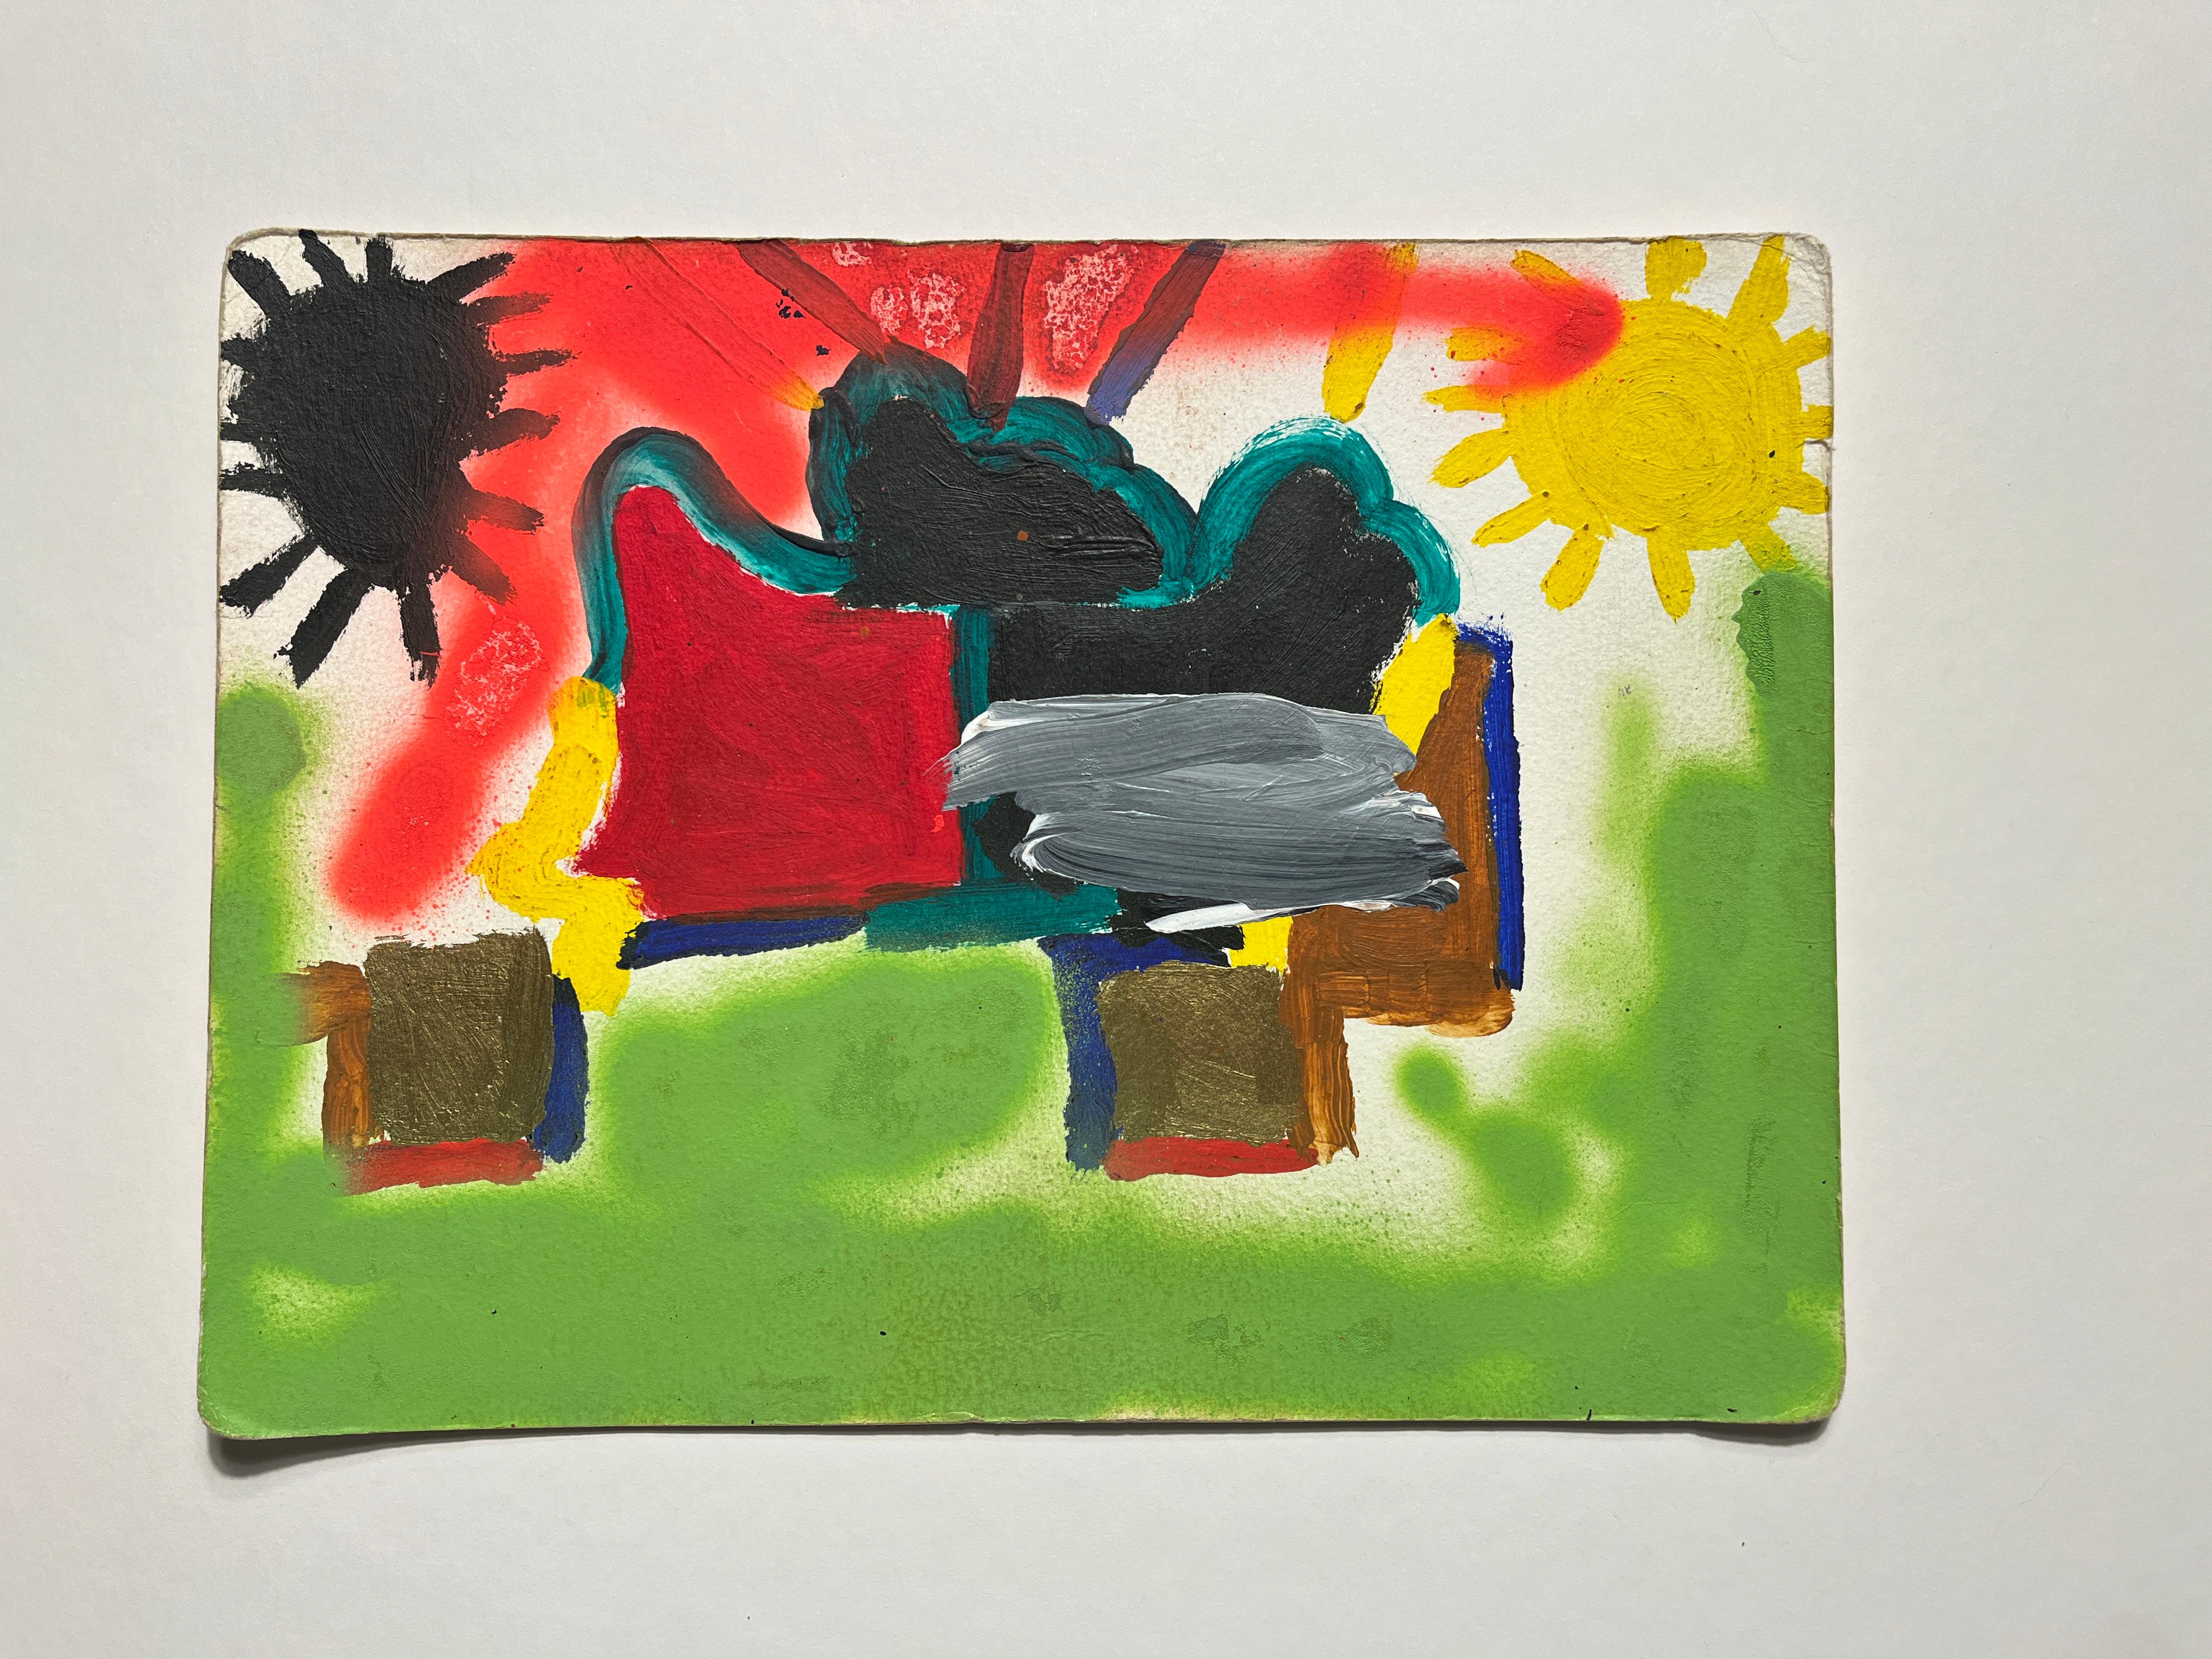 Jalen Masai
"Black Sun, Yellow Sun"
2021
Spray paint, acrylic paint on paper
12"x9" unframed
Unsigned
